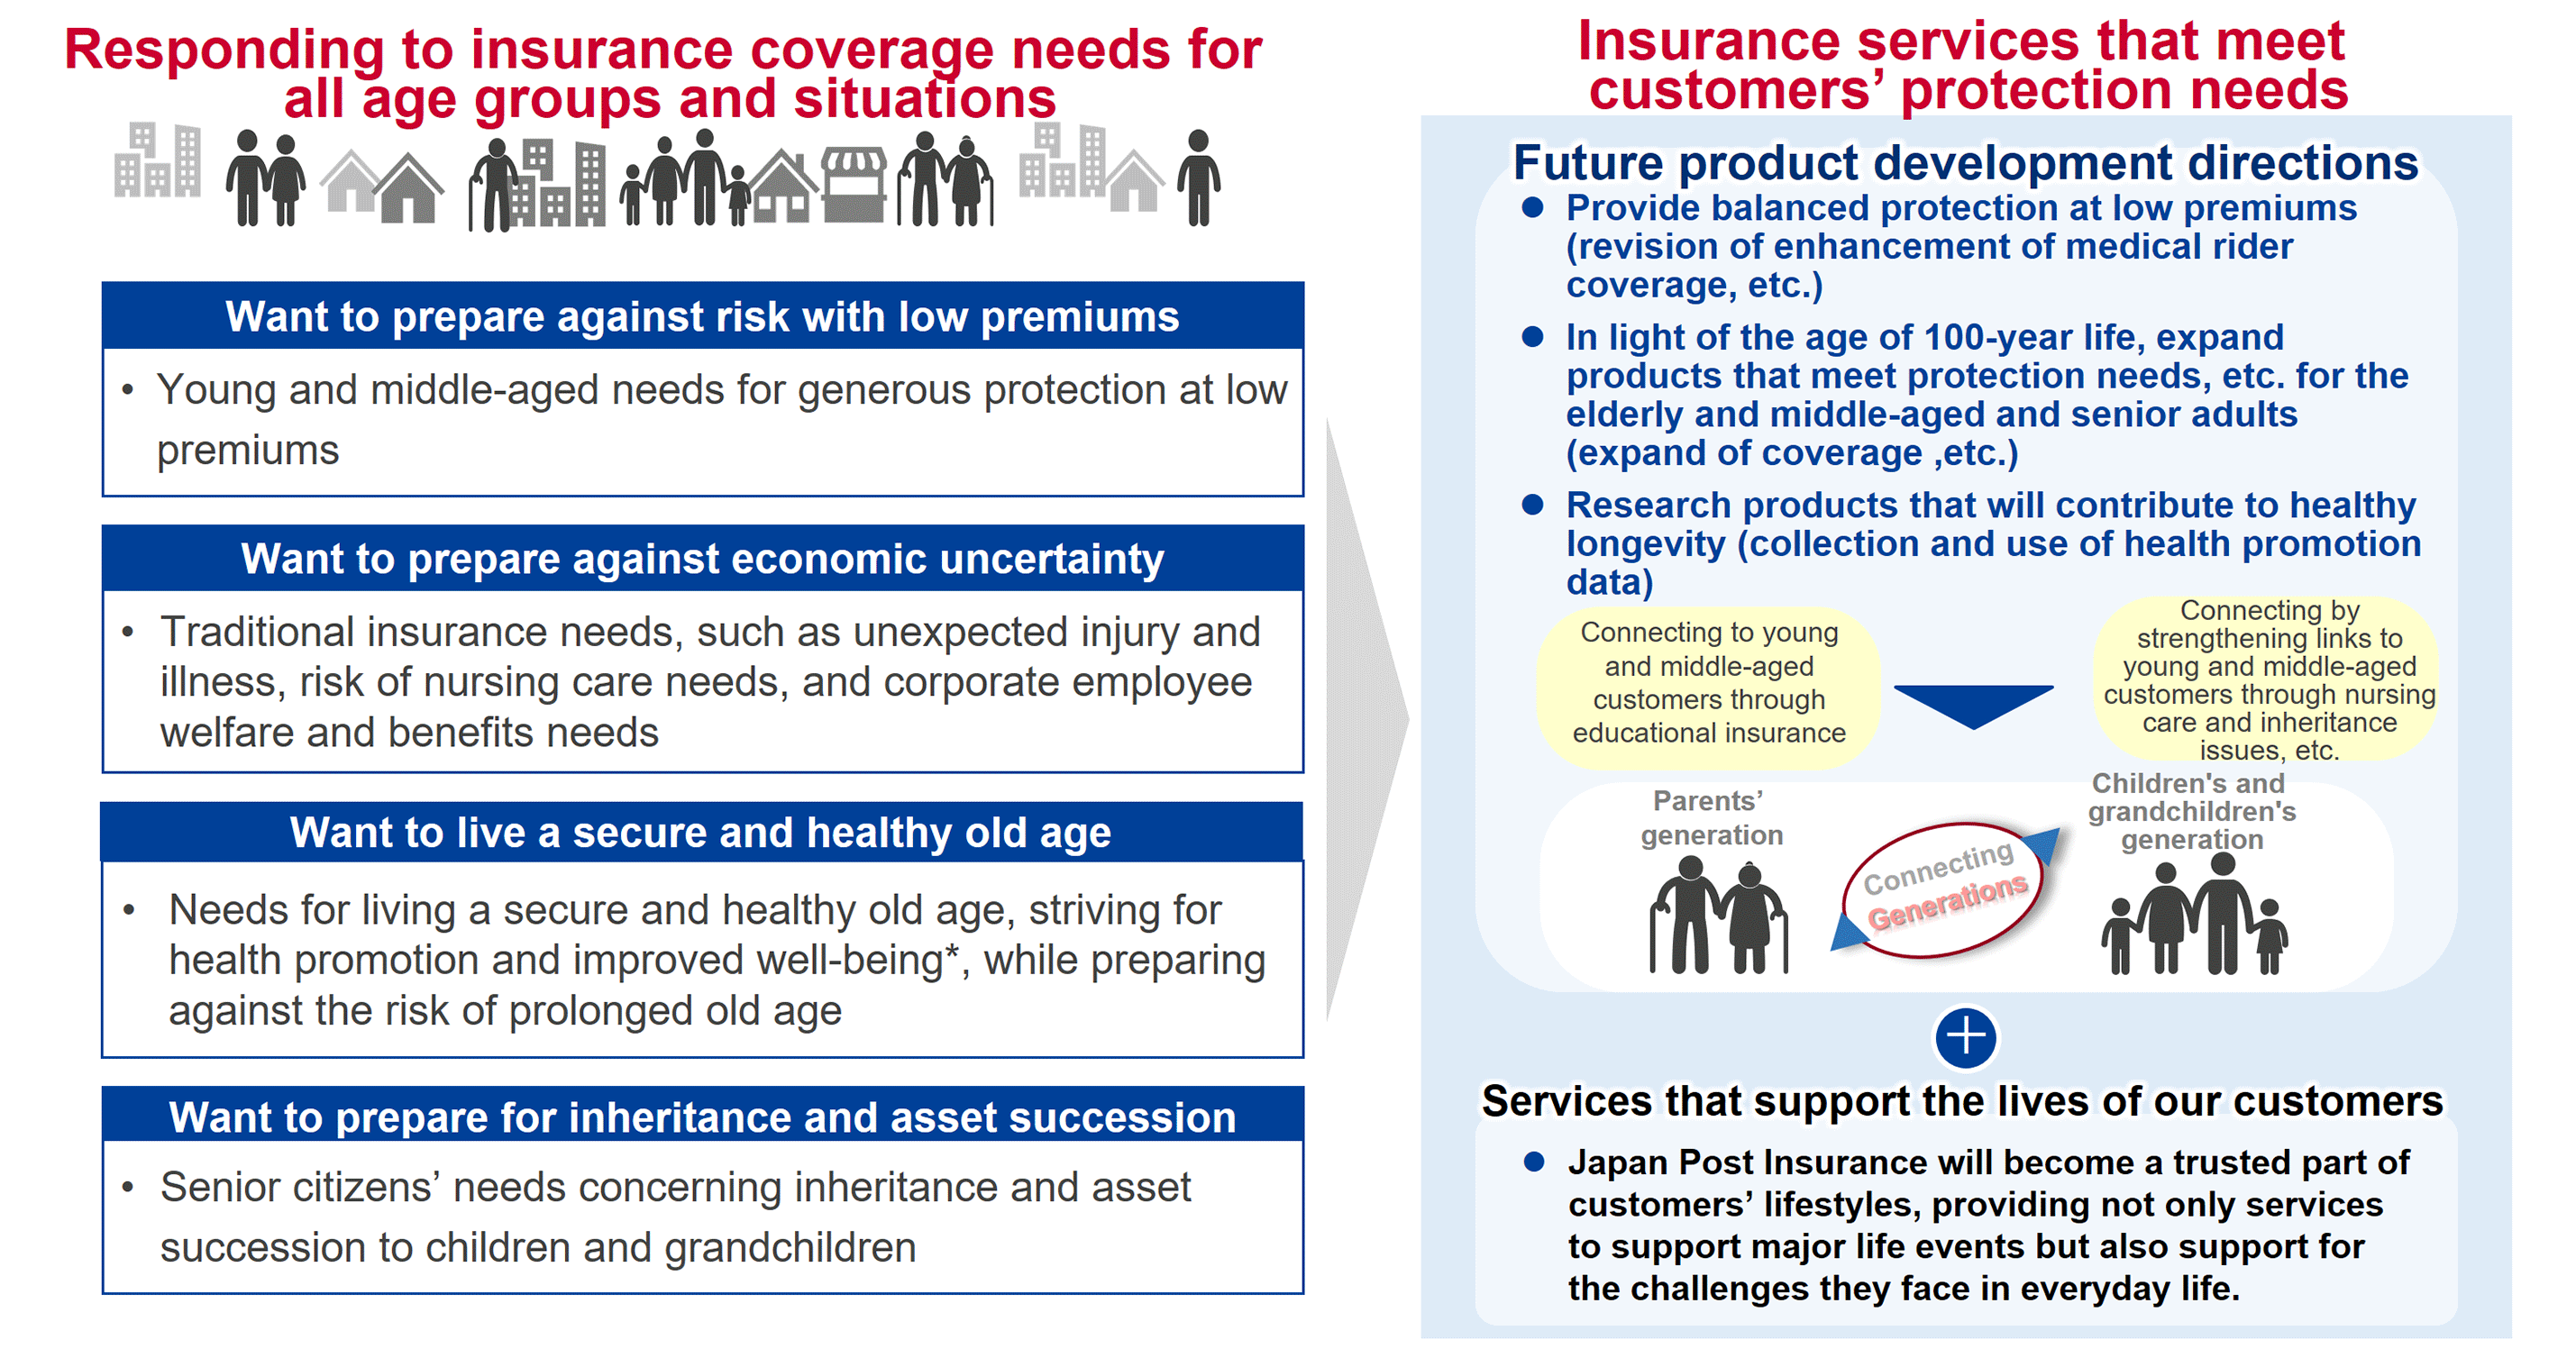 Enhancement of insurance services